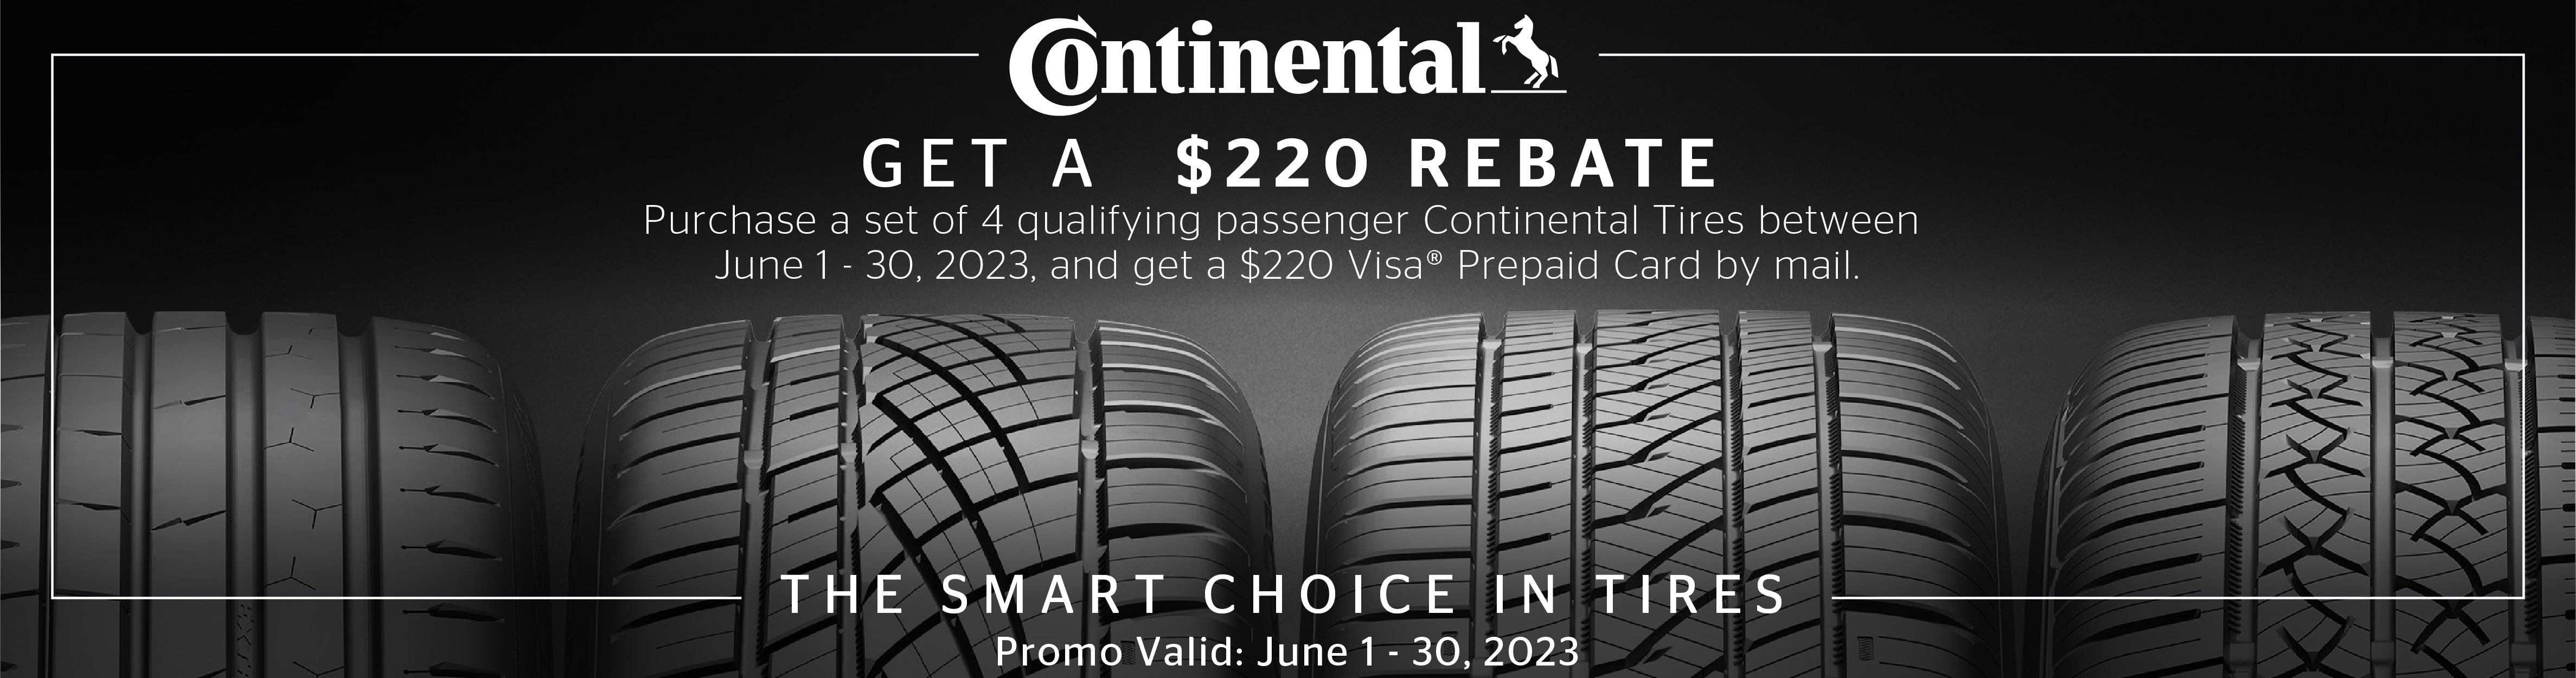 Continental Tires Rebates 2023